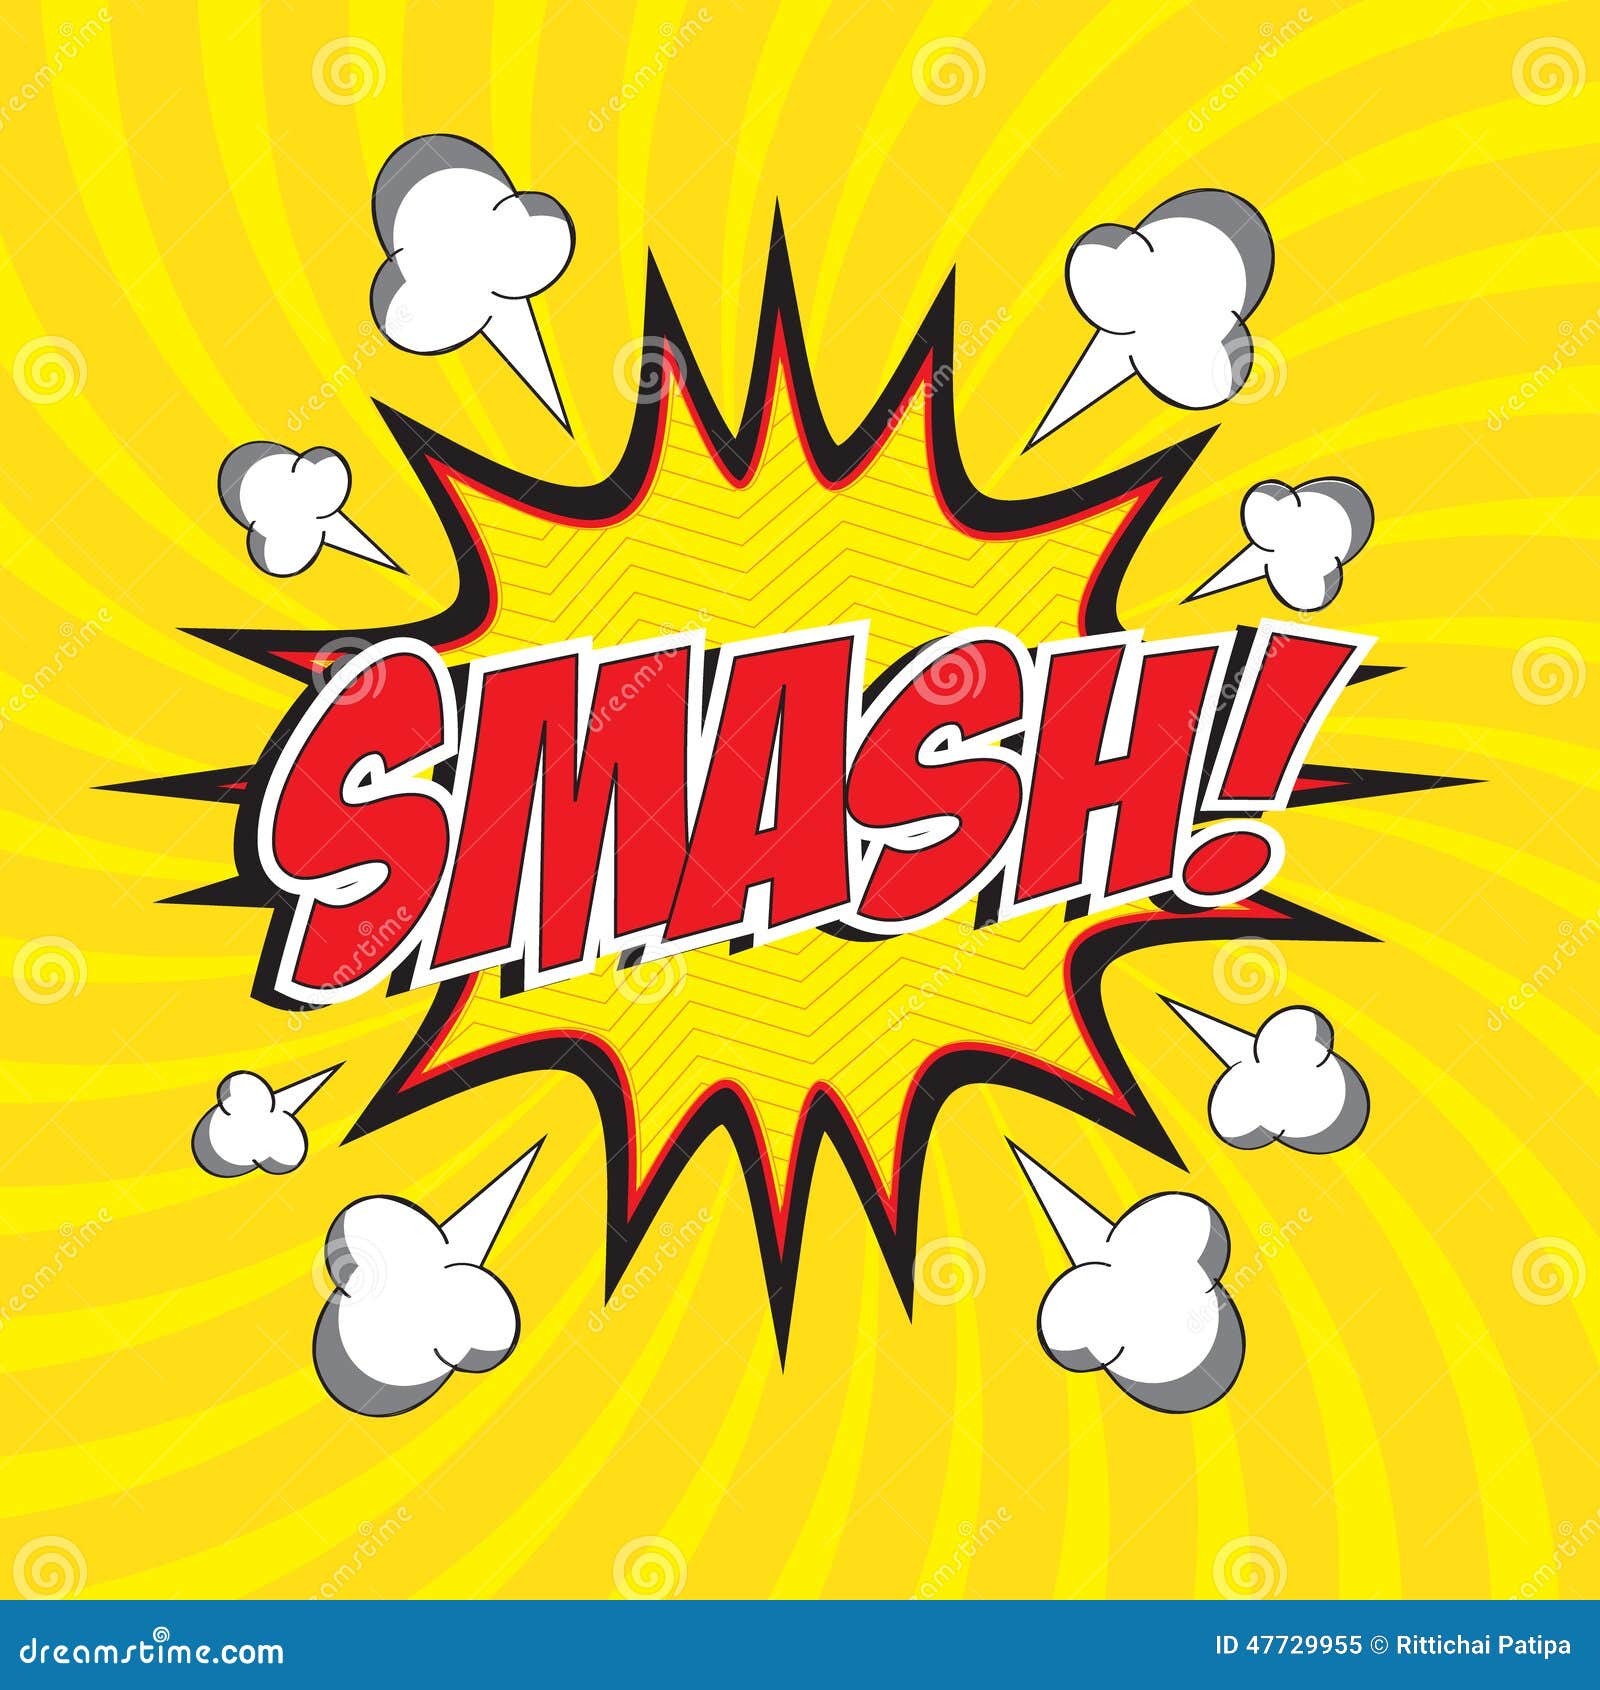 Smash! wording stock vector. Illustration of color, cartoon - 47729955